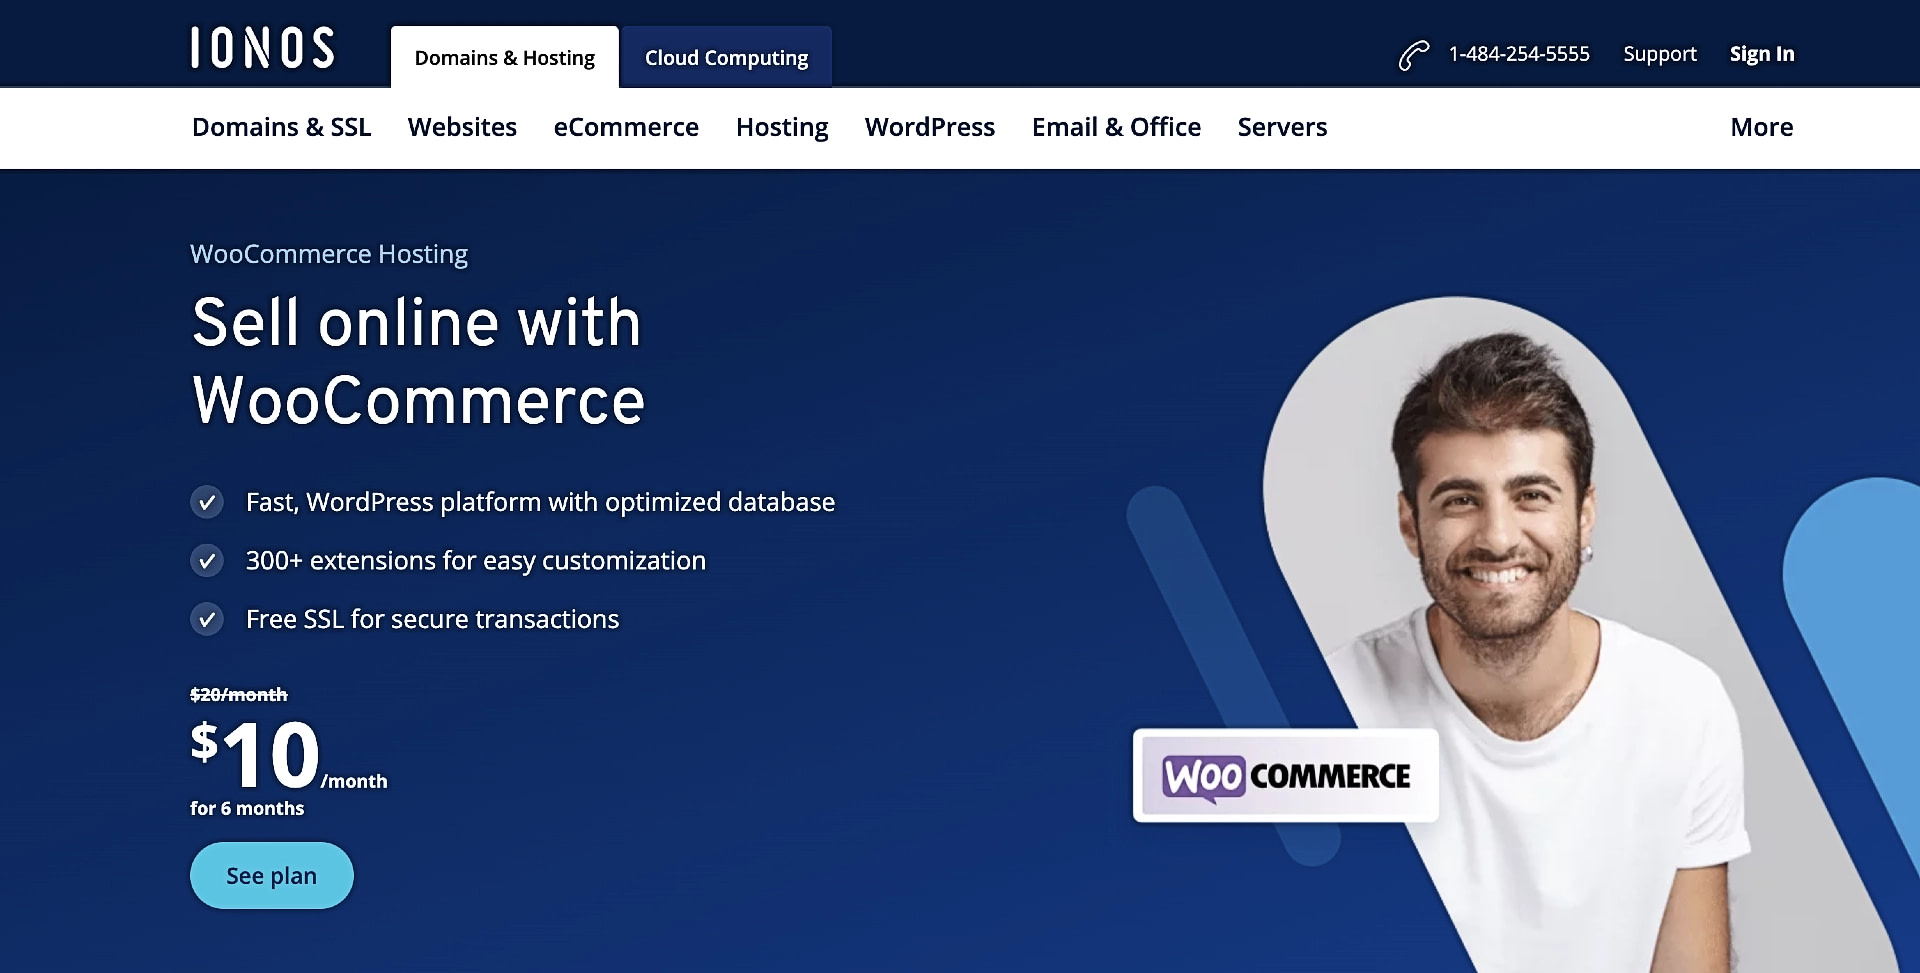 IONOS offers WooCommerce hosting.